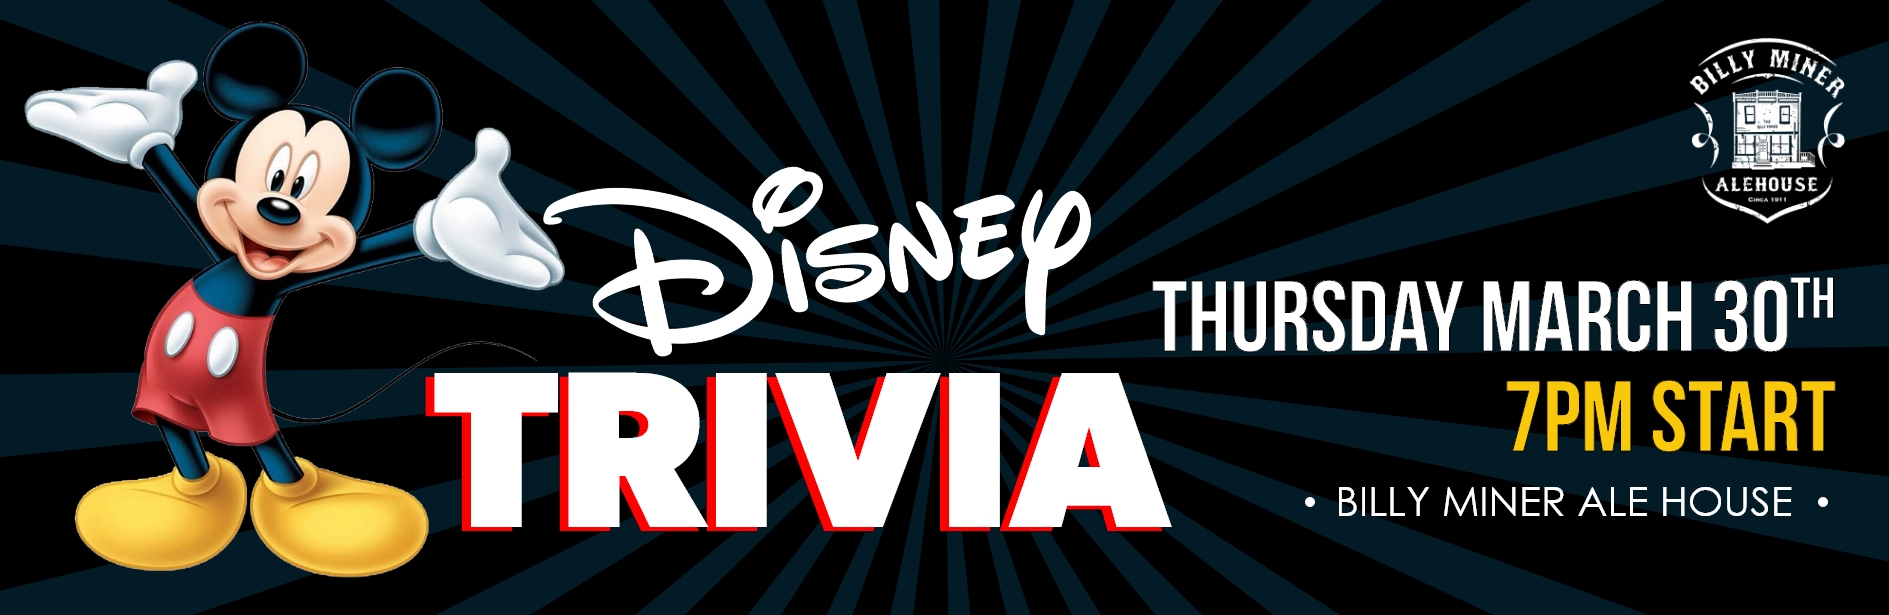 Disney Trivia Thursday March 30th